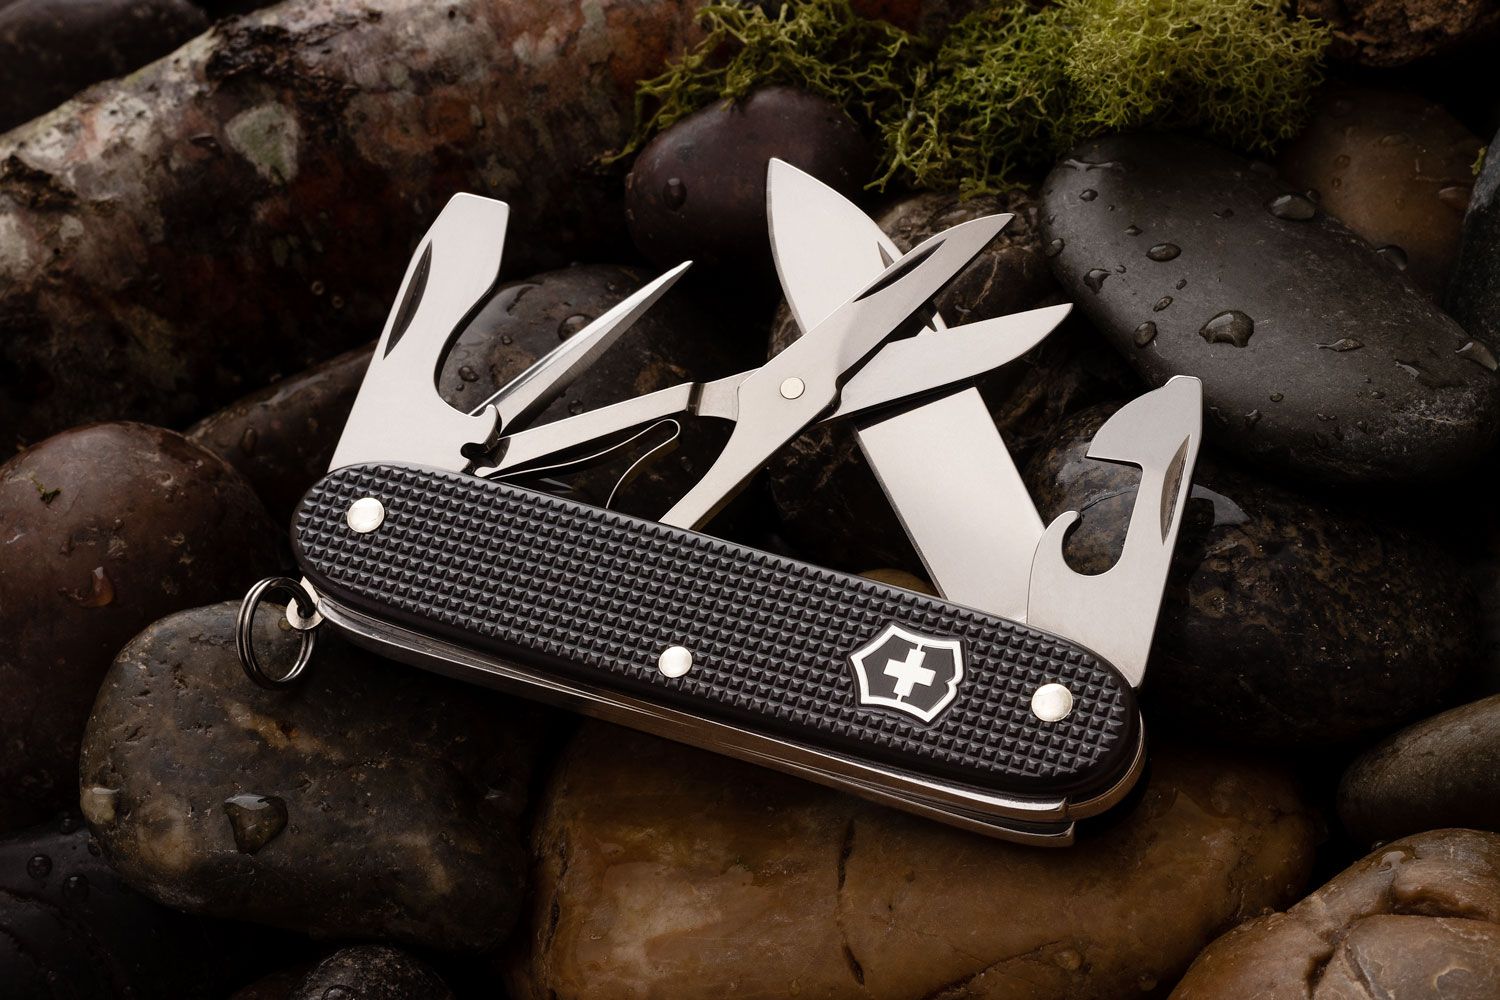 Victorinox Swiss Army Pioneer- Black Alox, 8 Functions - Bear Claw Knife &  Shear